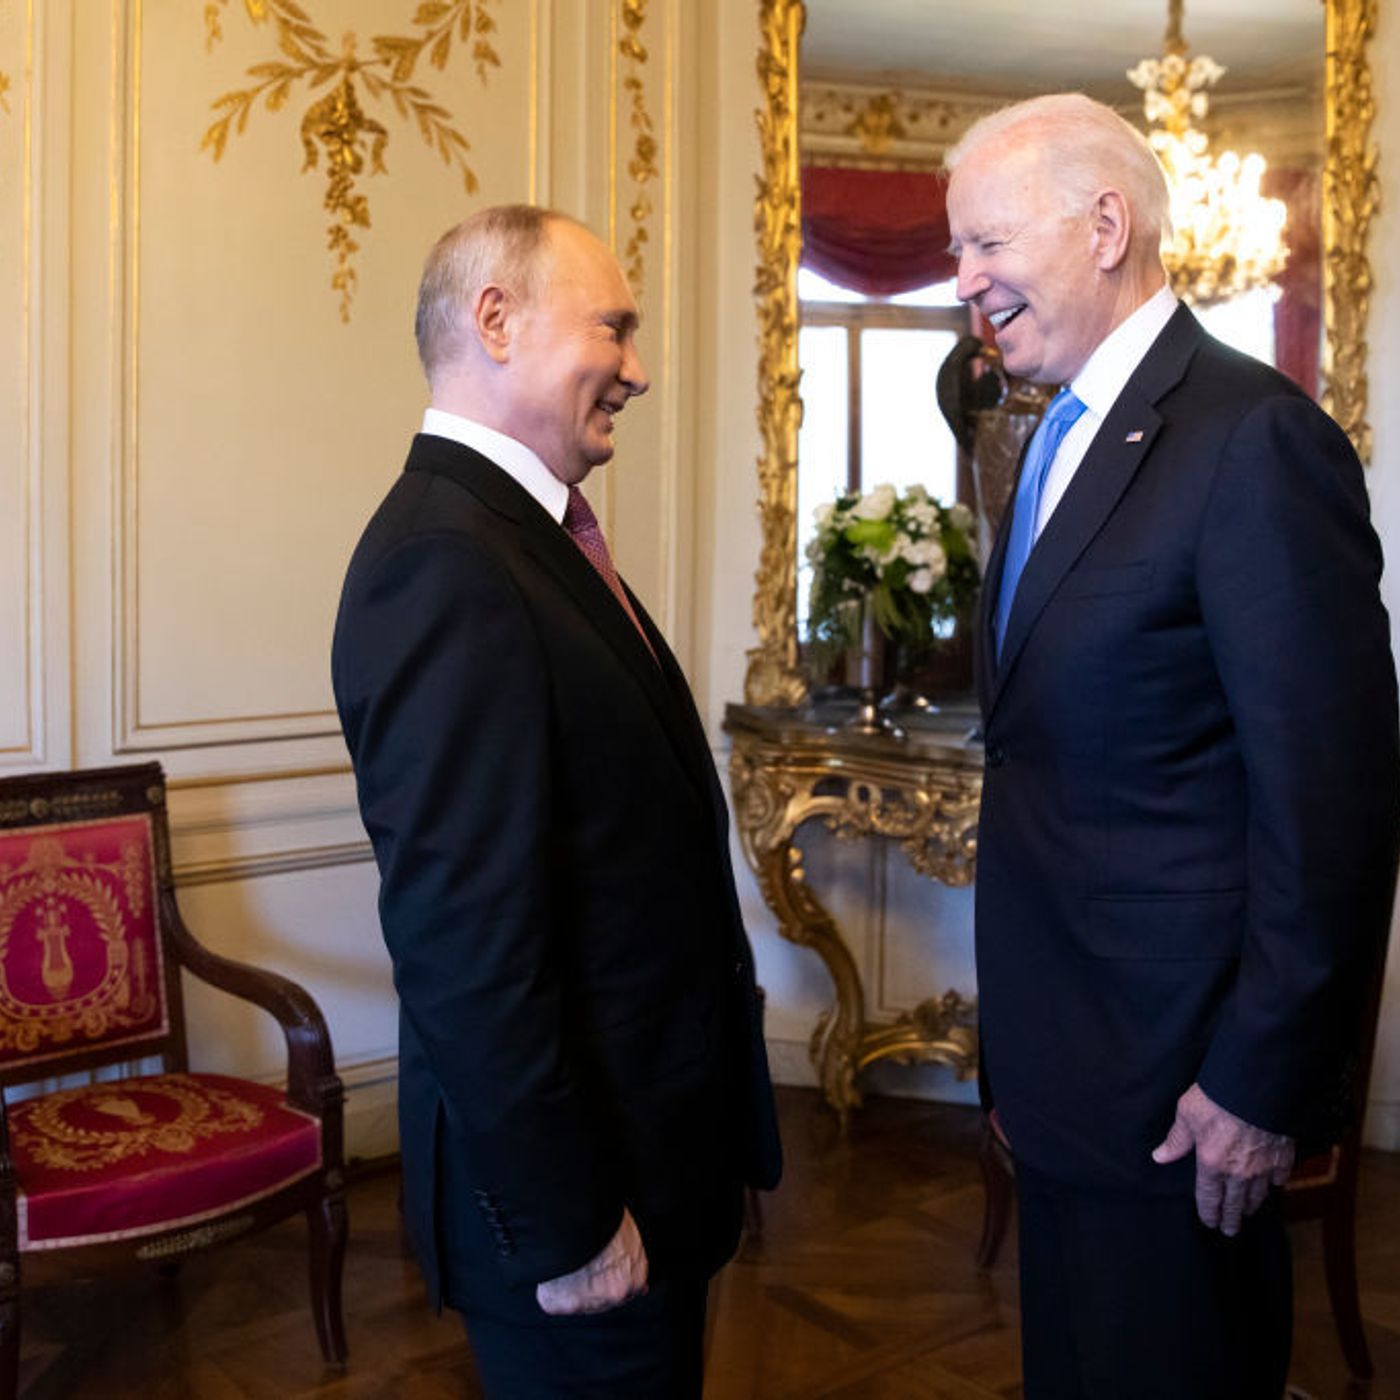 What does Putin think of Joe Biden?